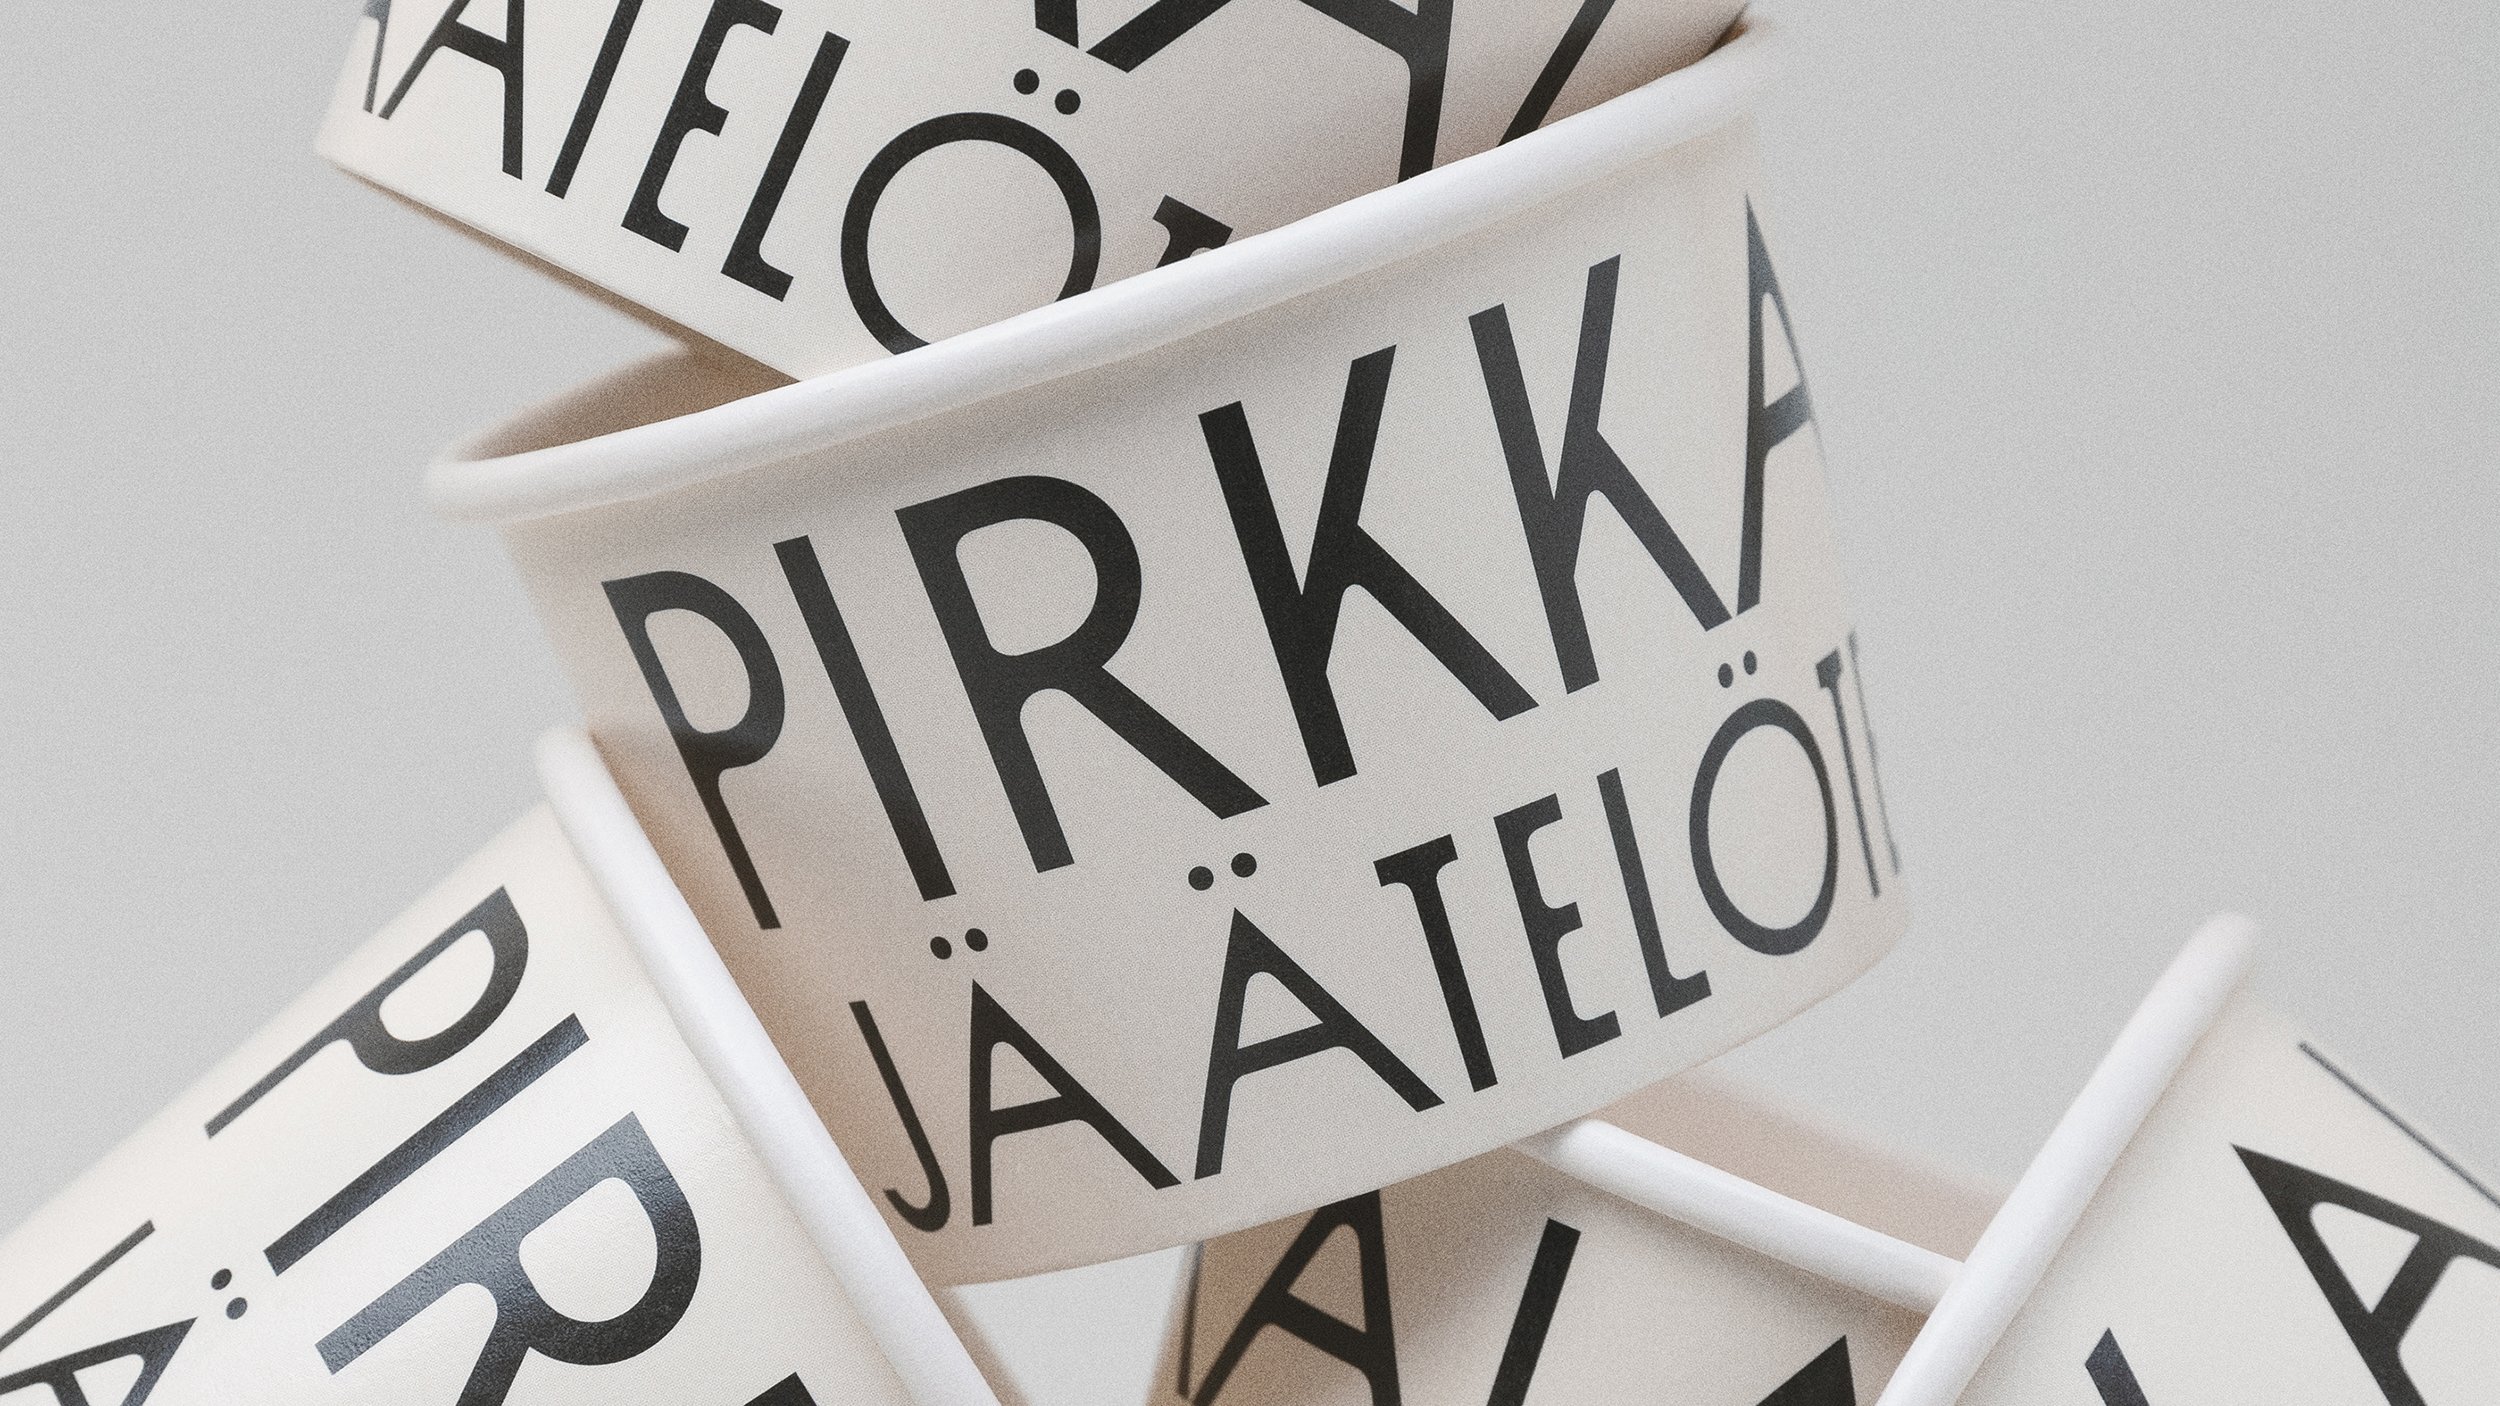 Logotype, brand identity design and packaging for Finish ice cream brand Pirkkalan designed by Werklig